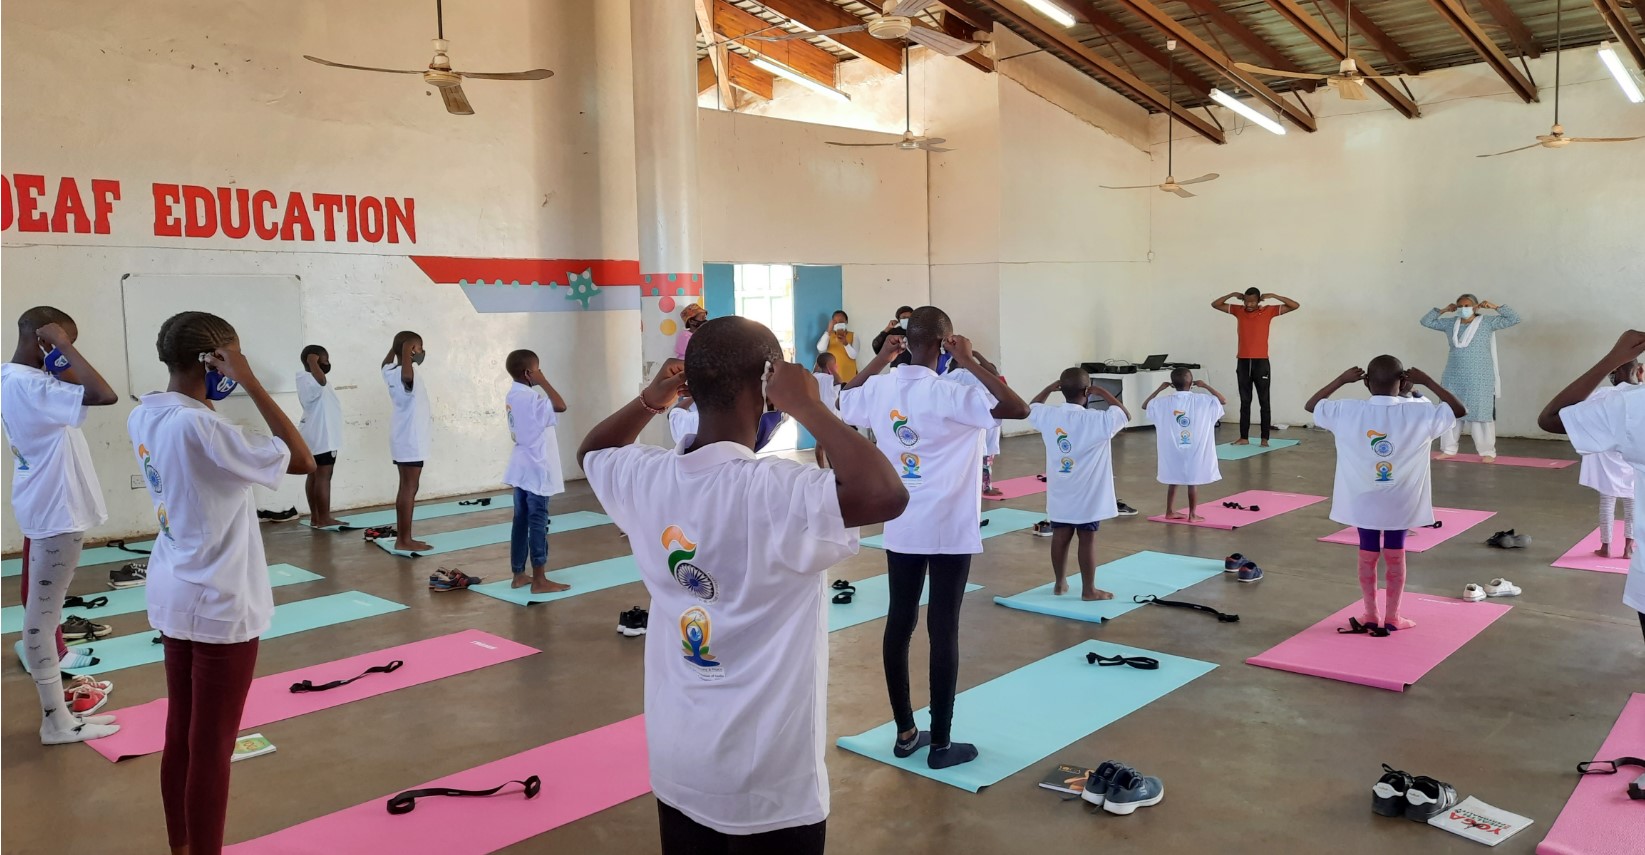 7th International Day of Yoga (Francistown)